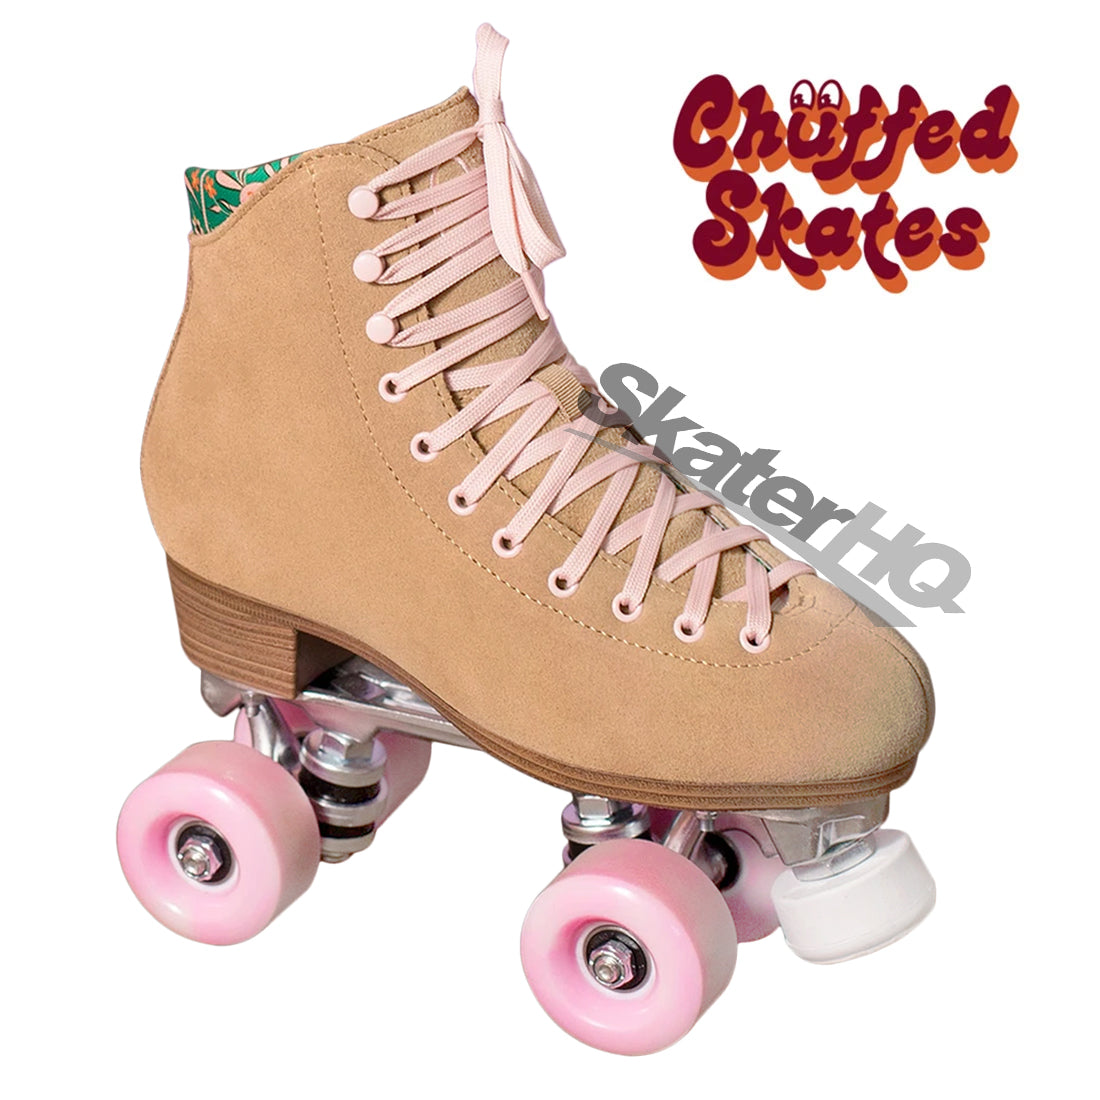 Chuffed Crew Iced Coffee 8US Roller Skates